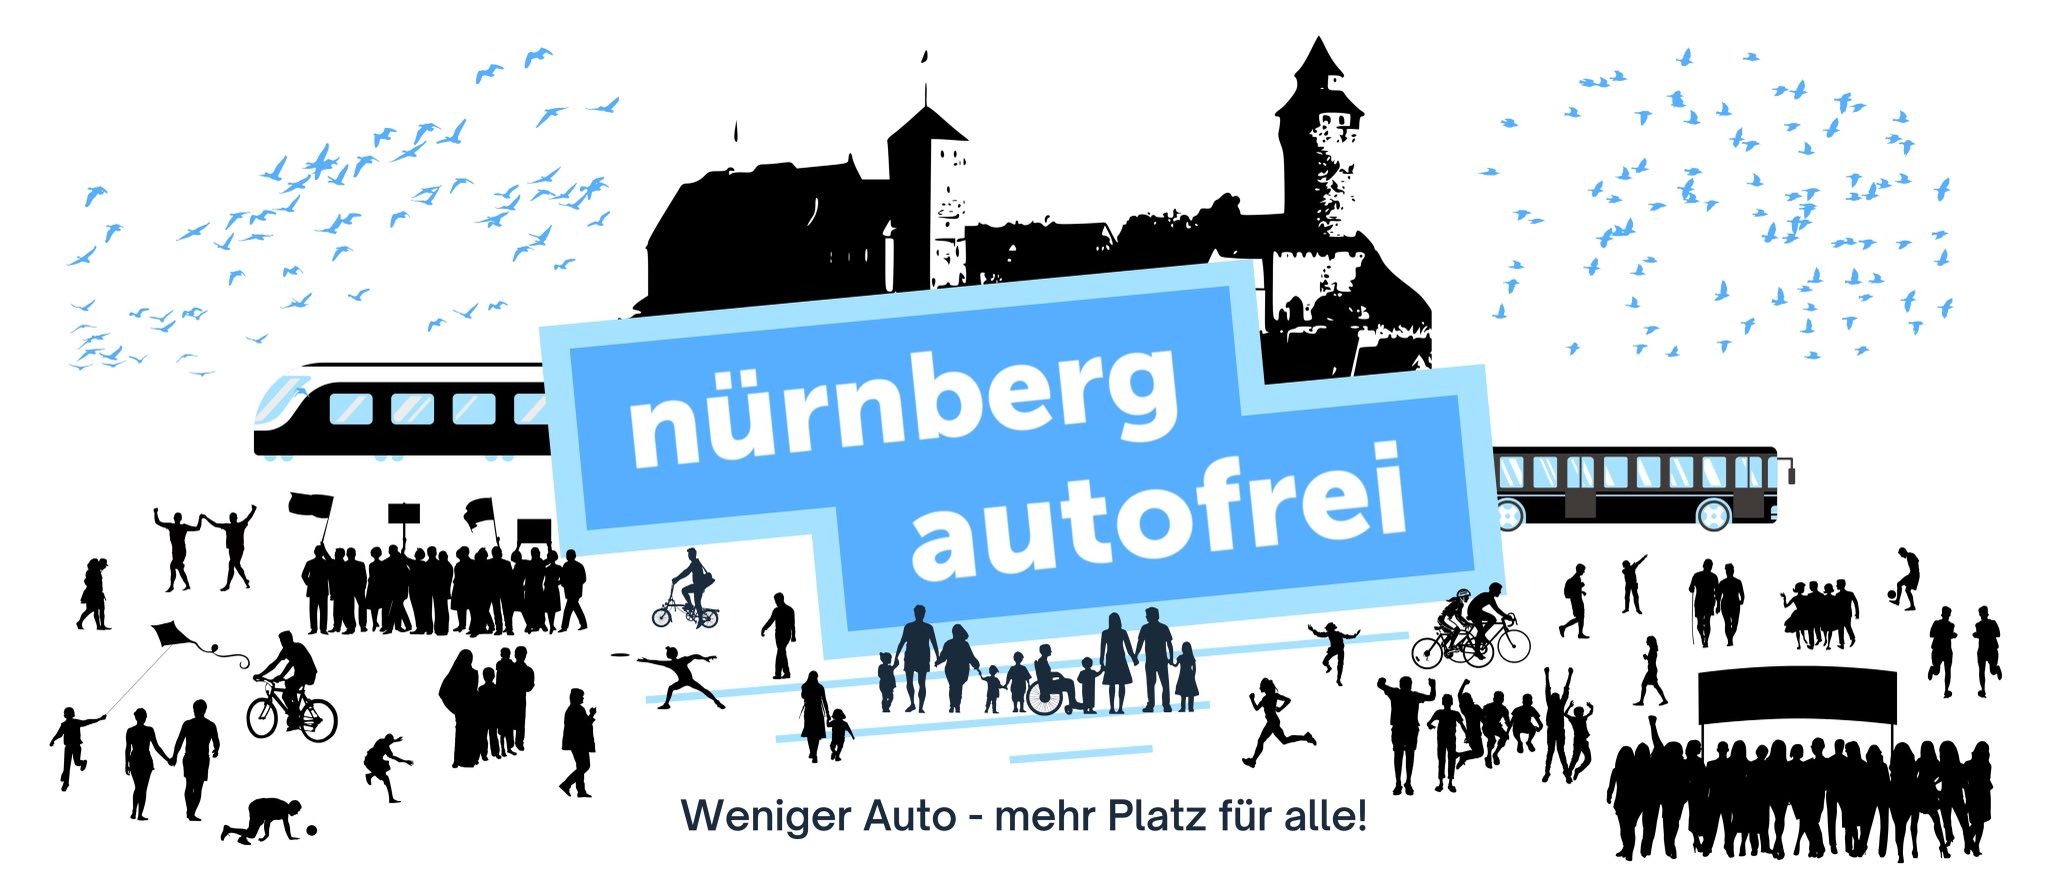 Nürnberg autofrei